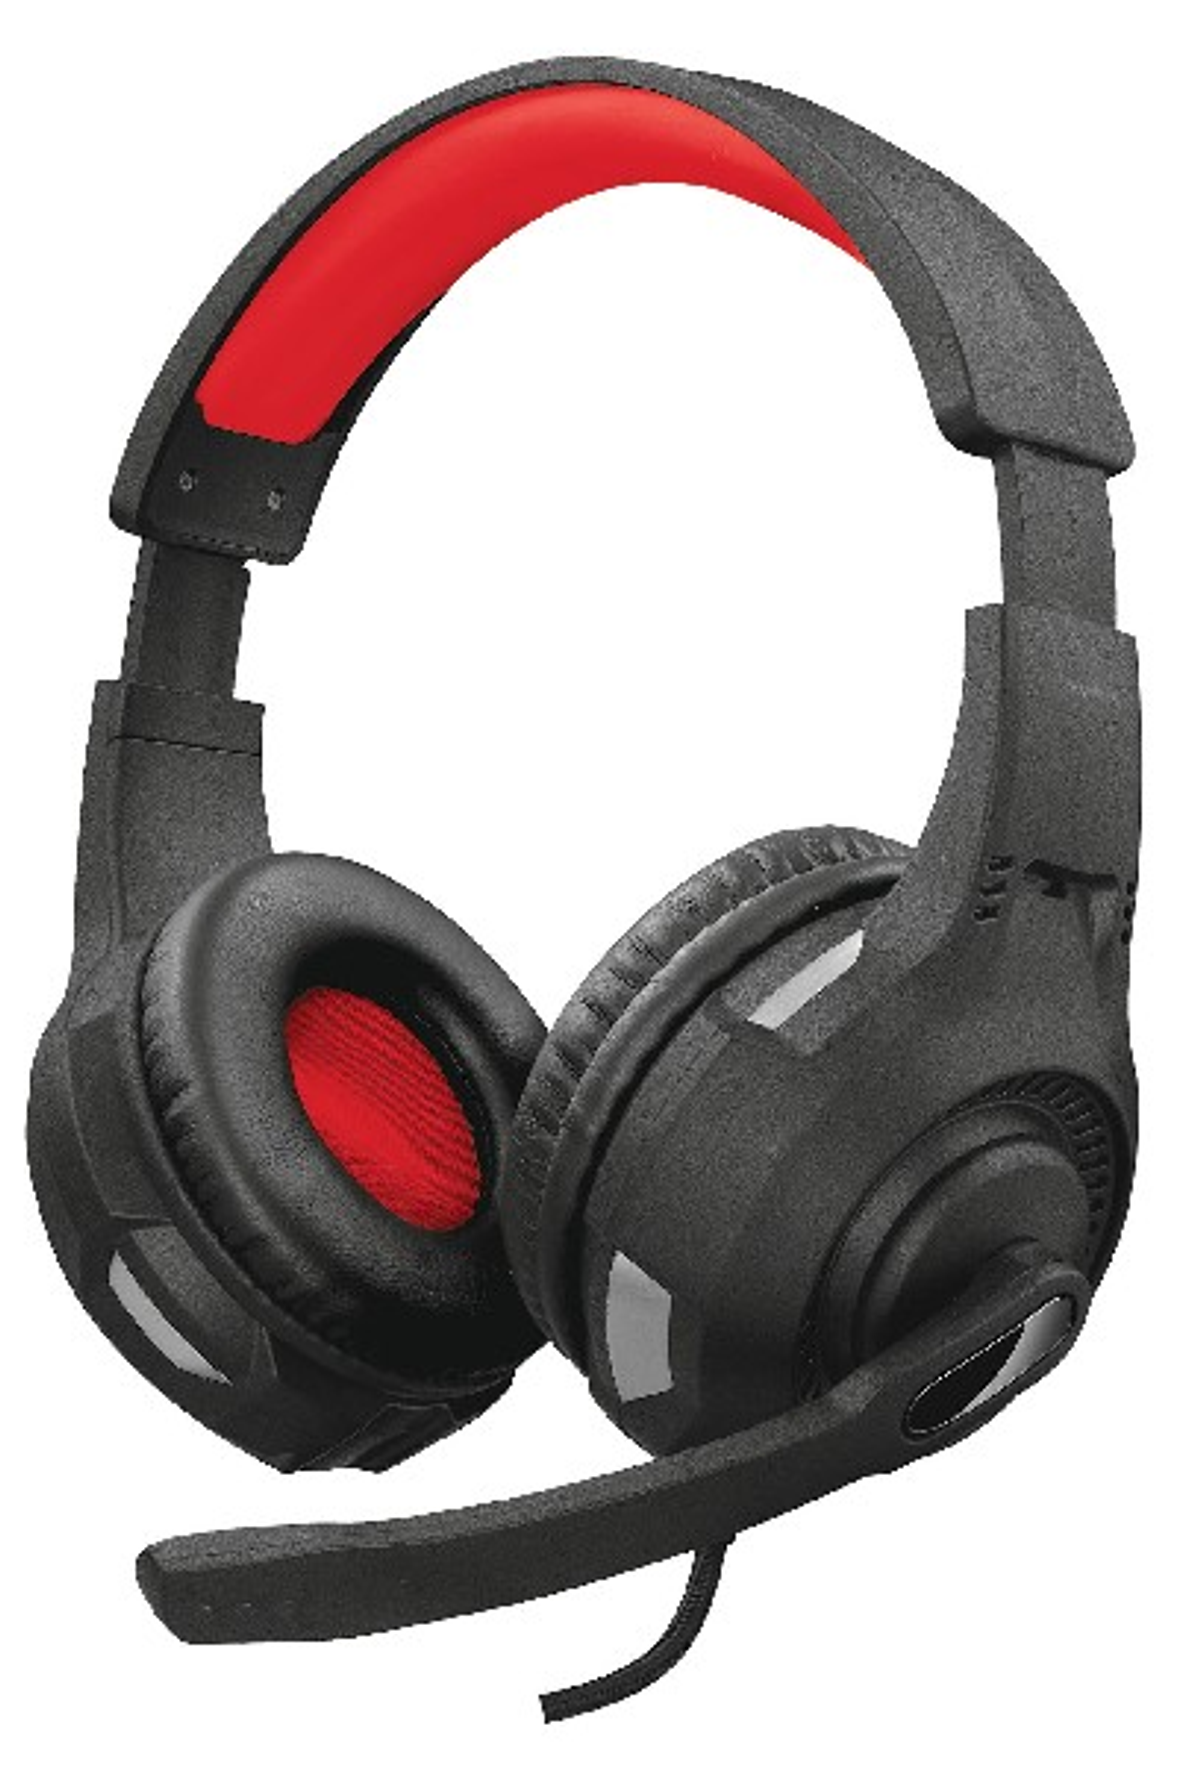 TRUST 22450 GXT 307 RAVU Over-ear Schwarz HEADSET, Gaming GAMING Headset